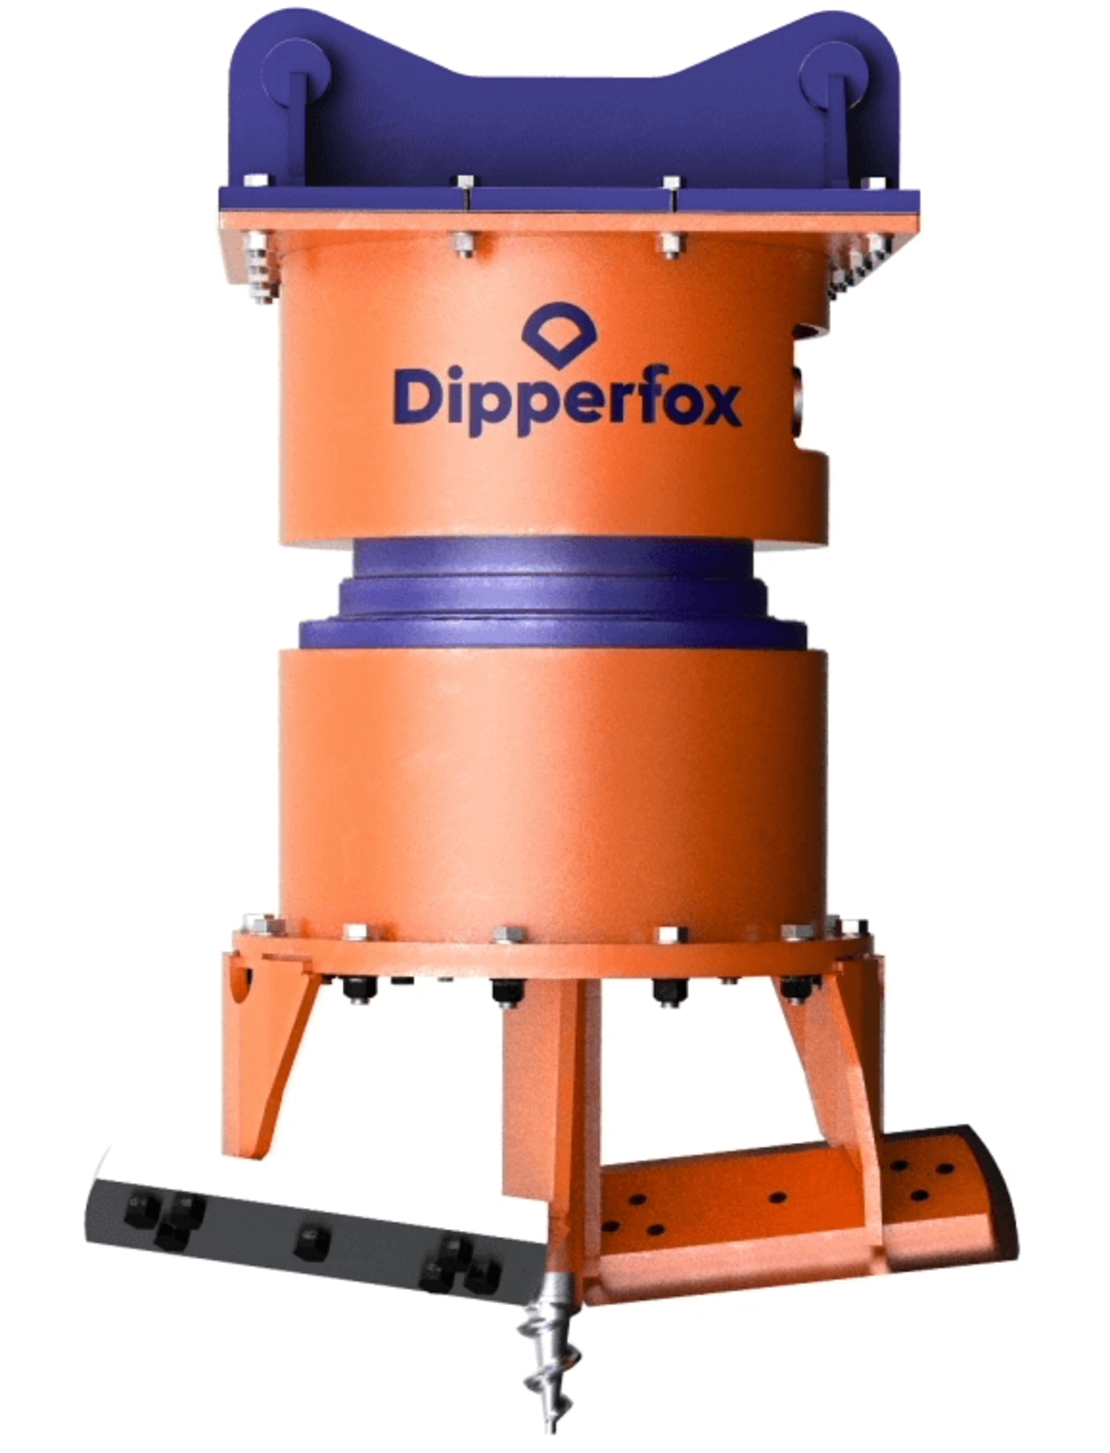 Dipperfox 850 Pro